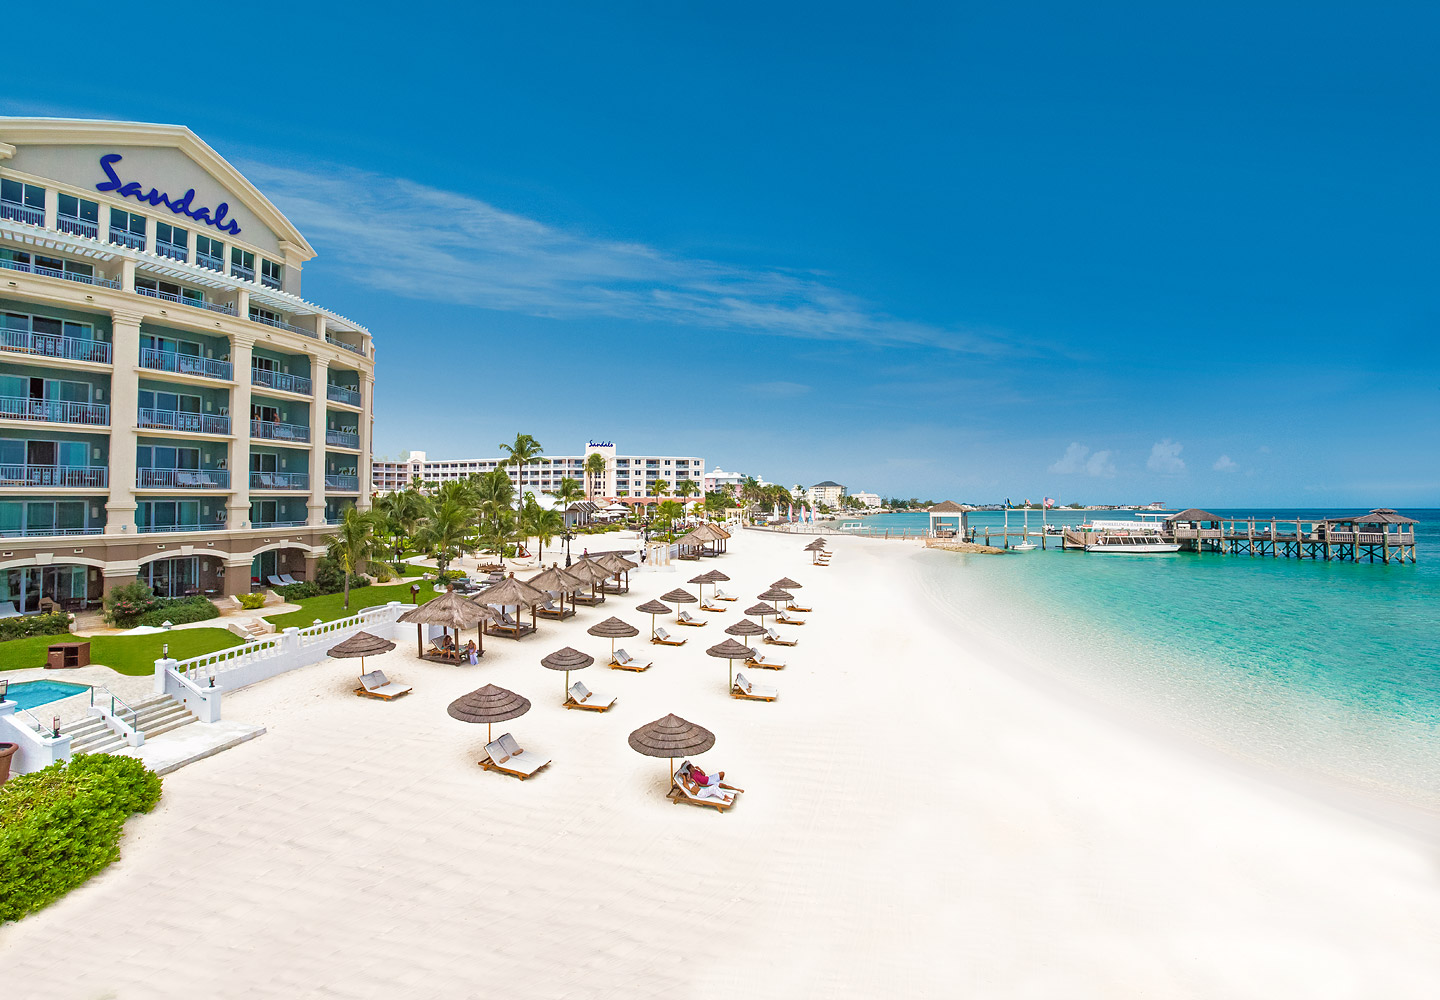 Sandals Royal Bahamian Spa Resort & Offshore Island, Nassau, Bahamas1440 x 1000